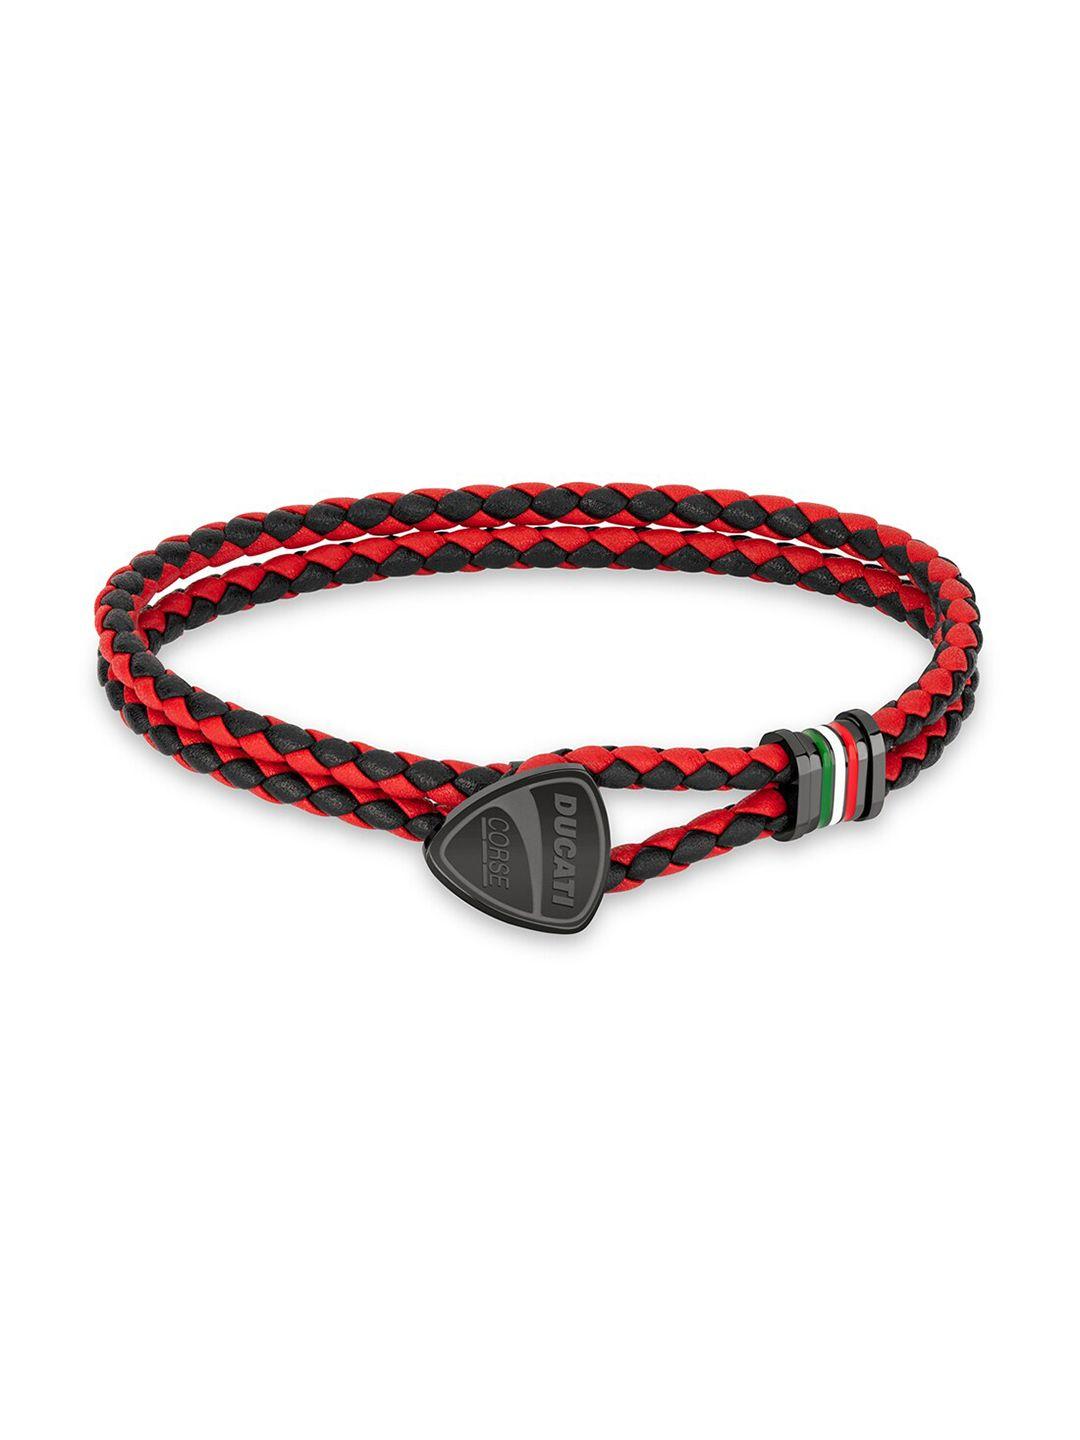 ducati corse men grey & red leather cuff bracelet